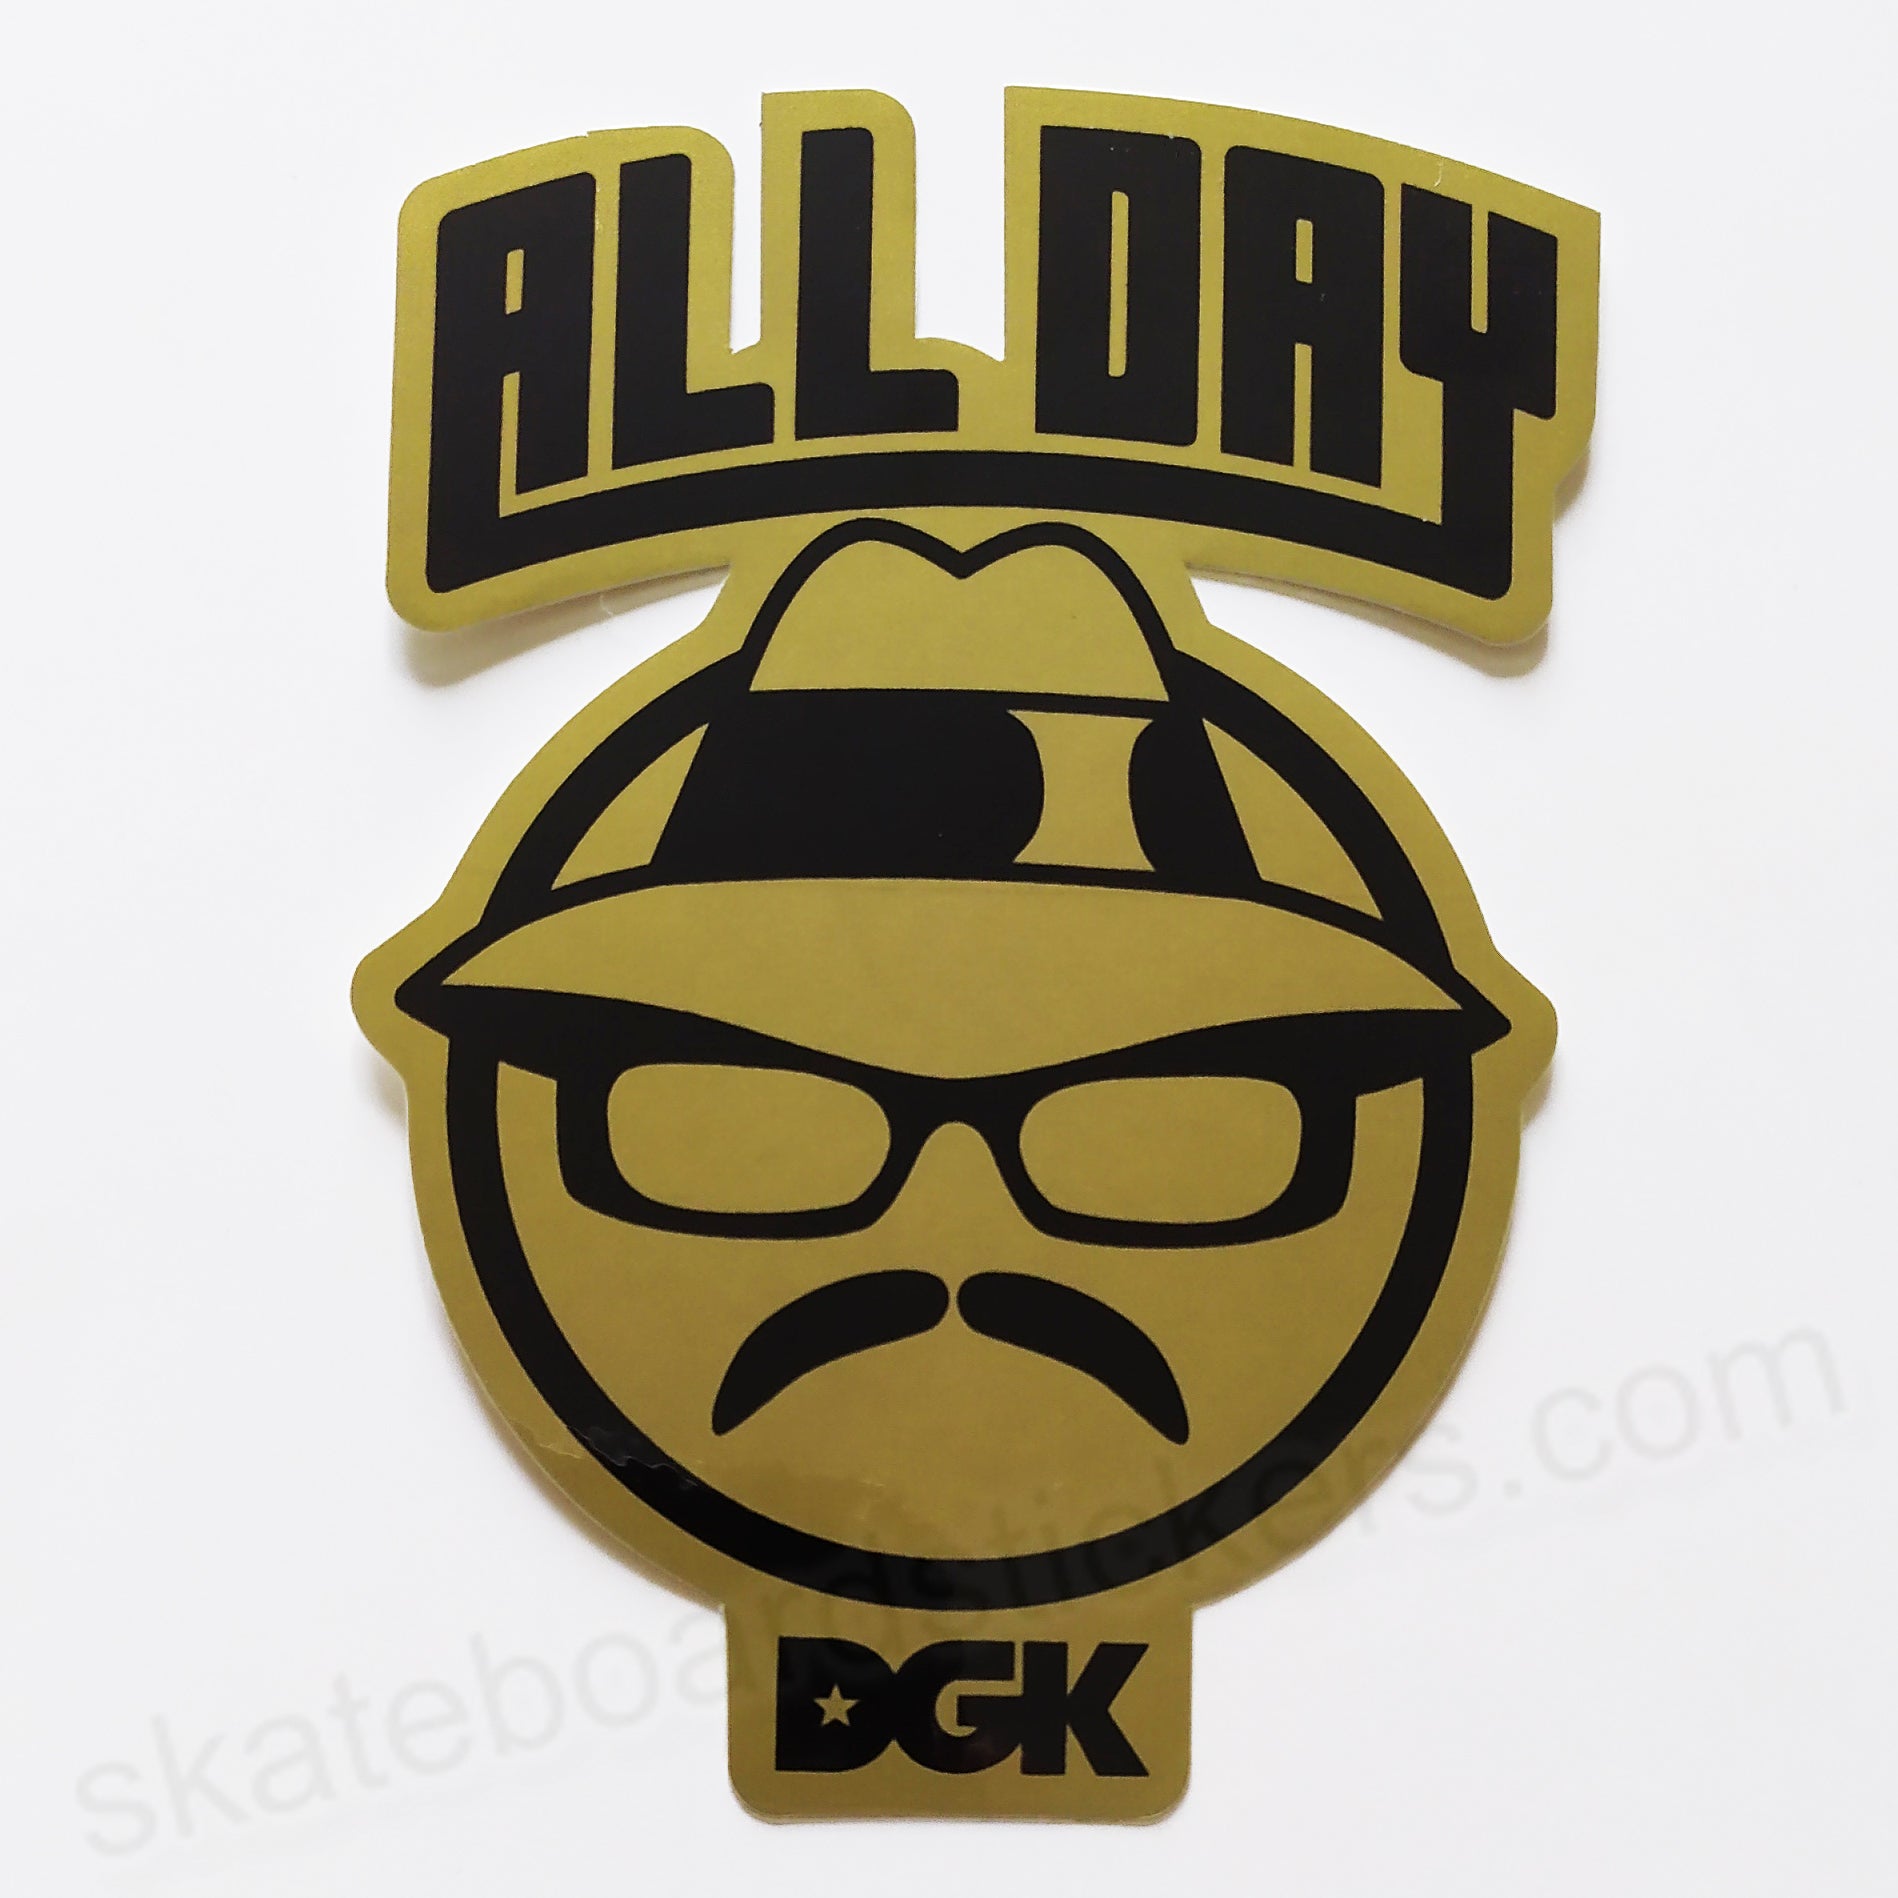 DGK / Dirty Ghetto Kids Skateboard Sticker - 10cm high approx - SkateboardStickers.com